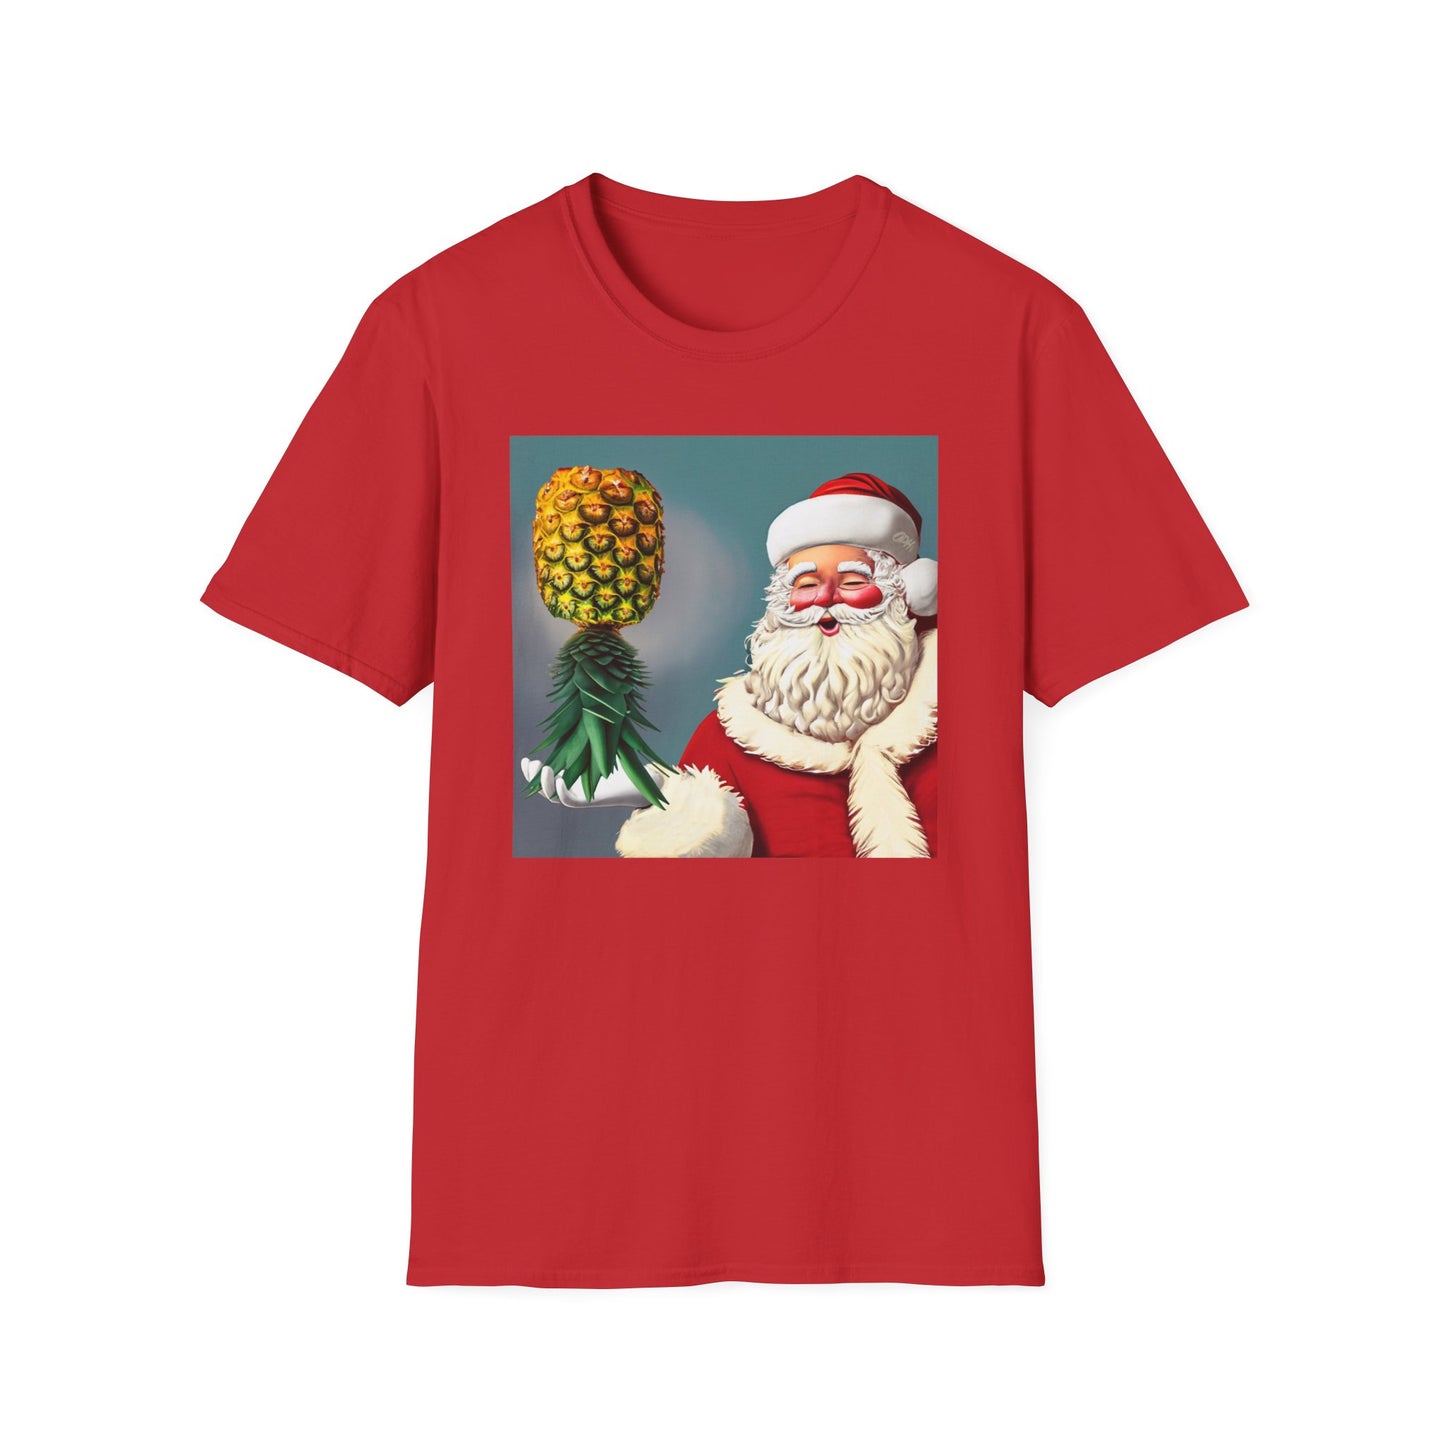 Upside Down Pineapple Santa Claus Short Sleeve Shirt, Christmas Tee, Upside Down Pineapple T-shirt, Swingers Pullover Clothing, Swinger